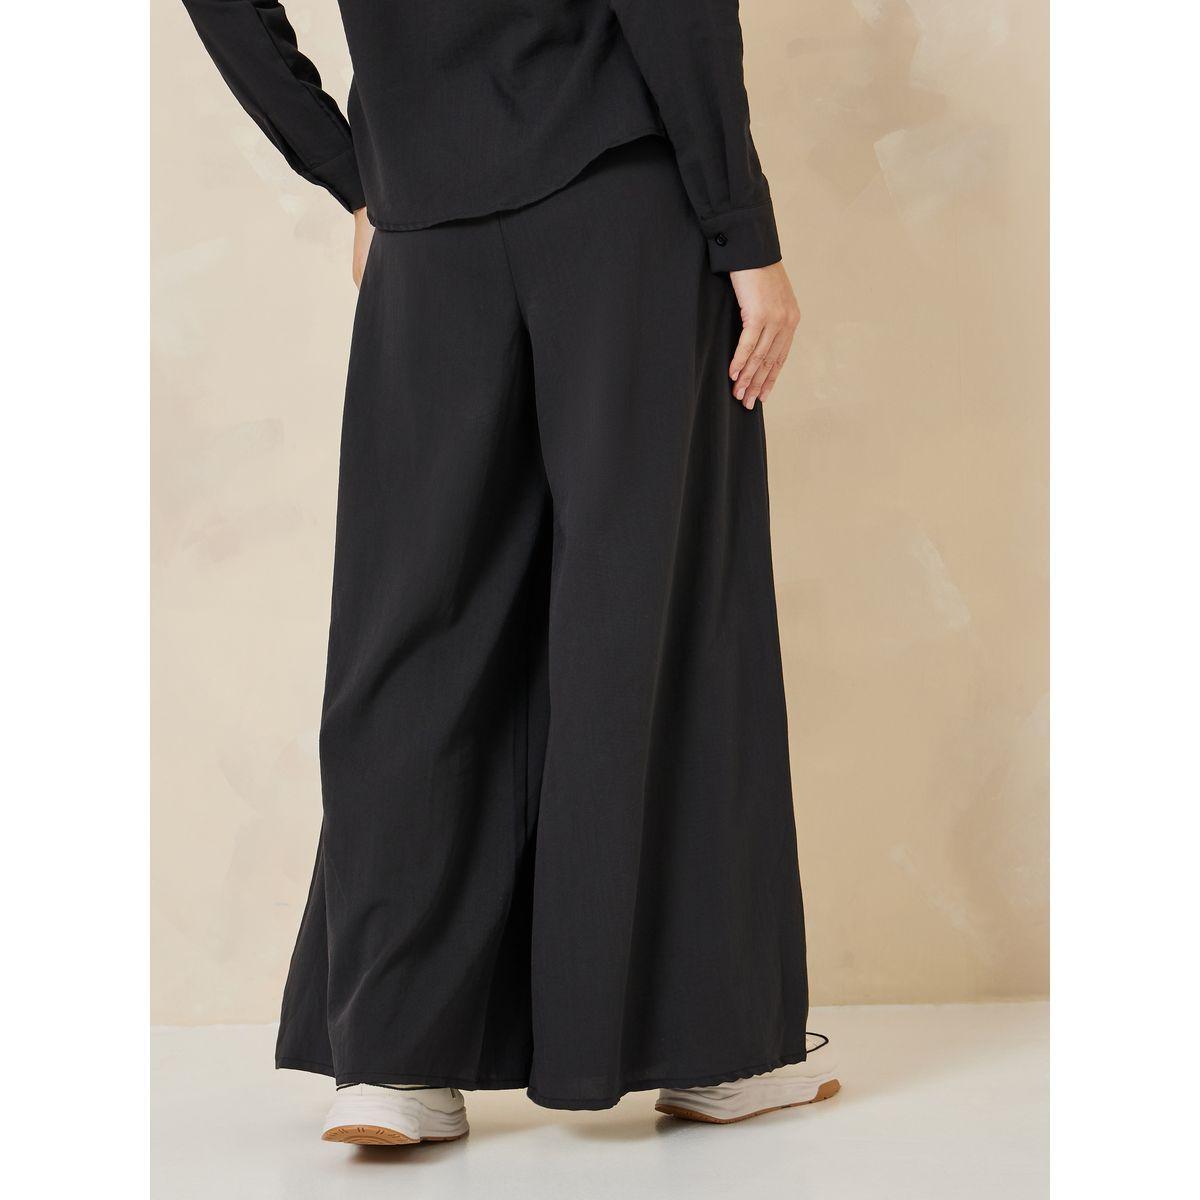 SheIn Women's Velvet Straight Leg Pants High Waist Drawstring Solid Trousers  Black X-Small at Amazon Women's Clothing store